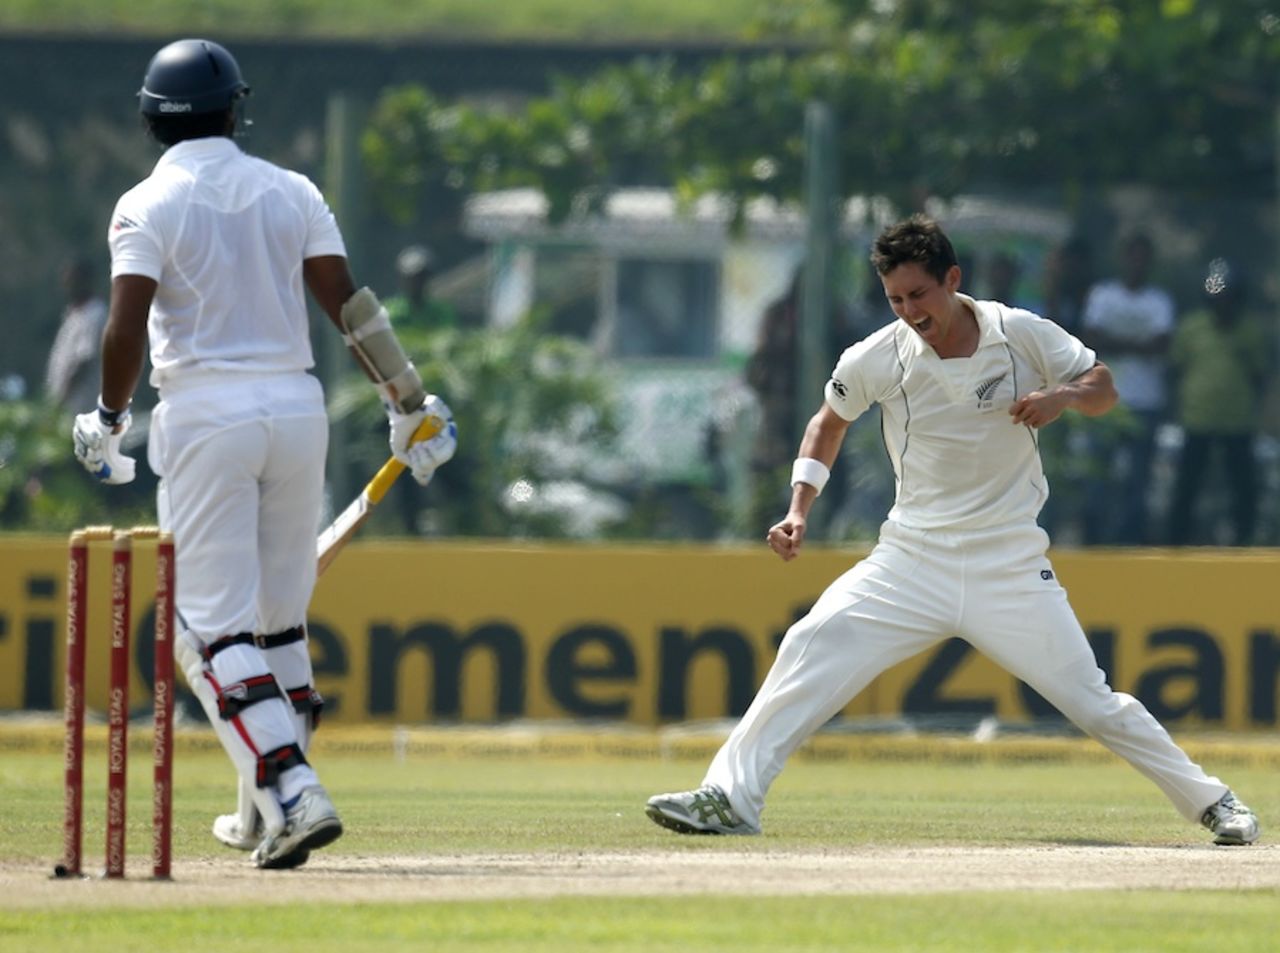 Trent Boult had Kumar Sangakkara caught at slip, Sri Lanka v New Zealand, 1st Test, Galle, 2nd day, November 18, 2012